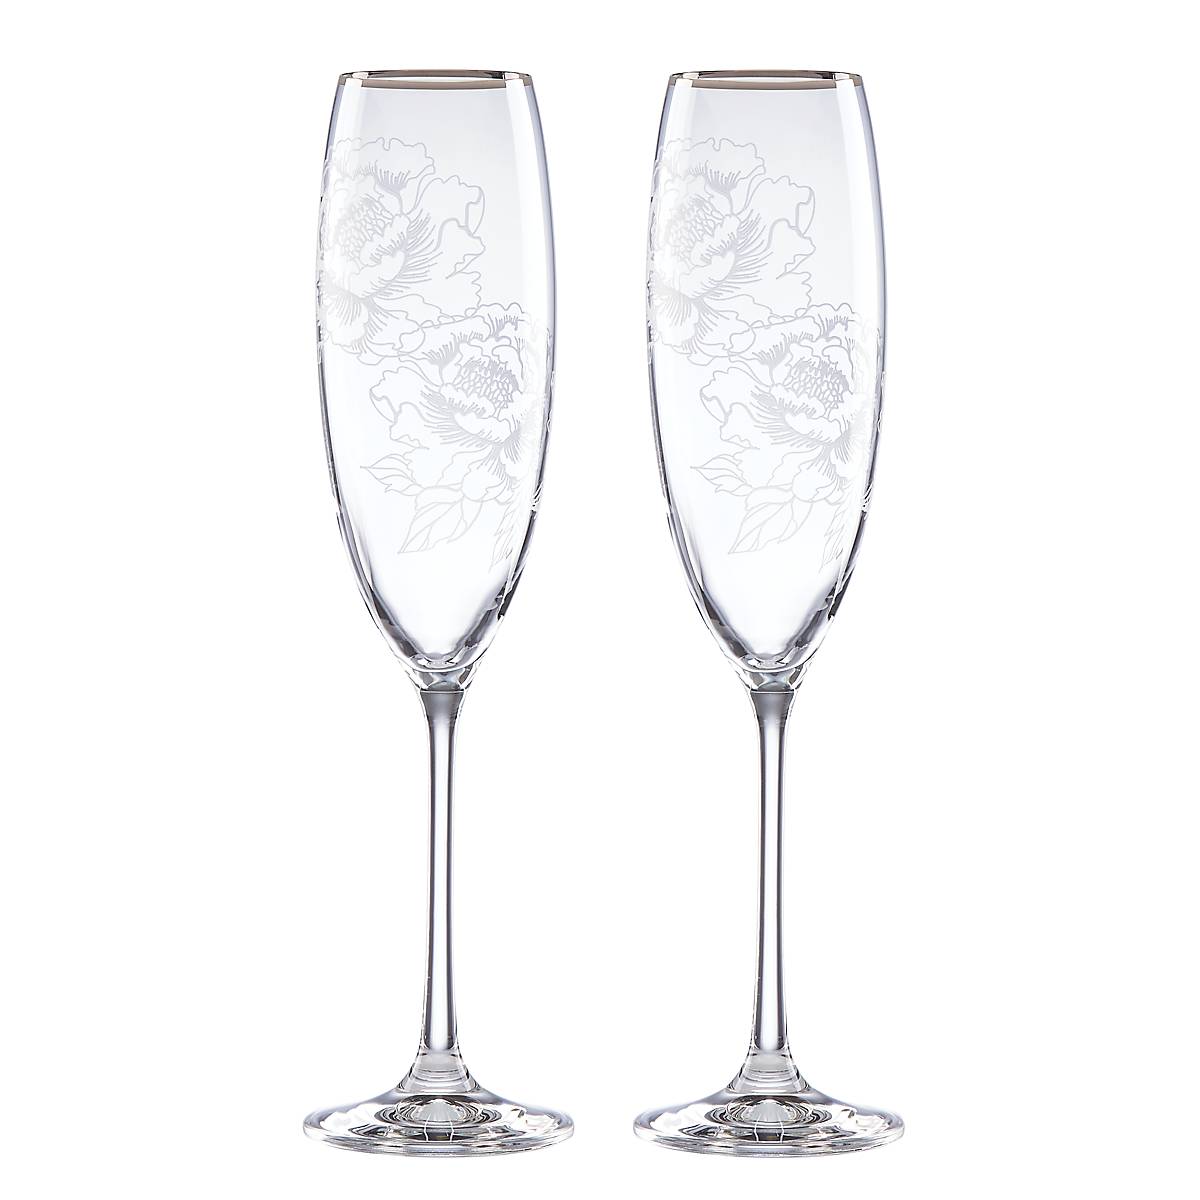 Brass Wine Glasses, Metal Goblet, Champagne Flutes, Wedding Anniversary  Gift for Couple Marriage, Corporate Clients Set of 4 Flute Design – τα  καλύτερα προϊόντα στο ηλεκτρονικό κατάστημα Joom Geek